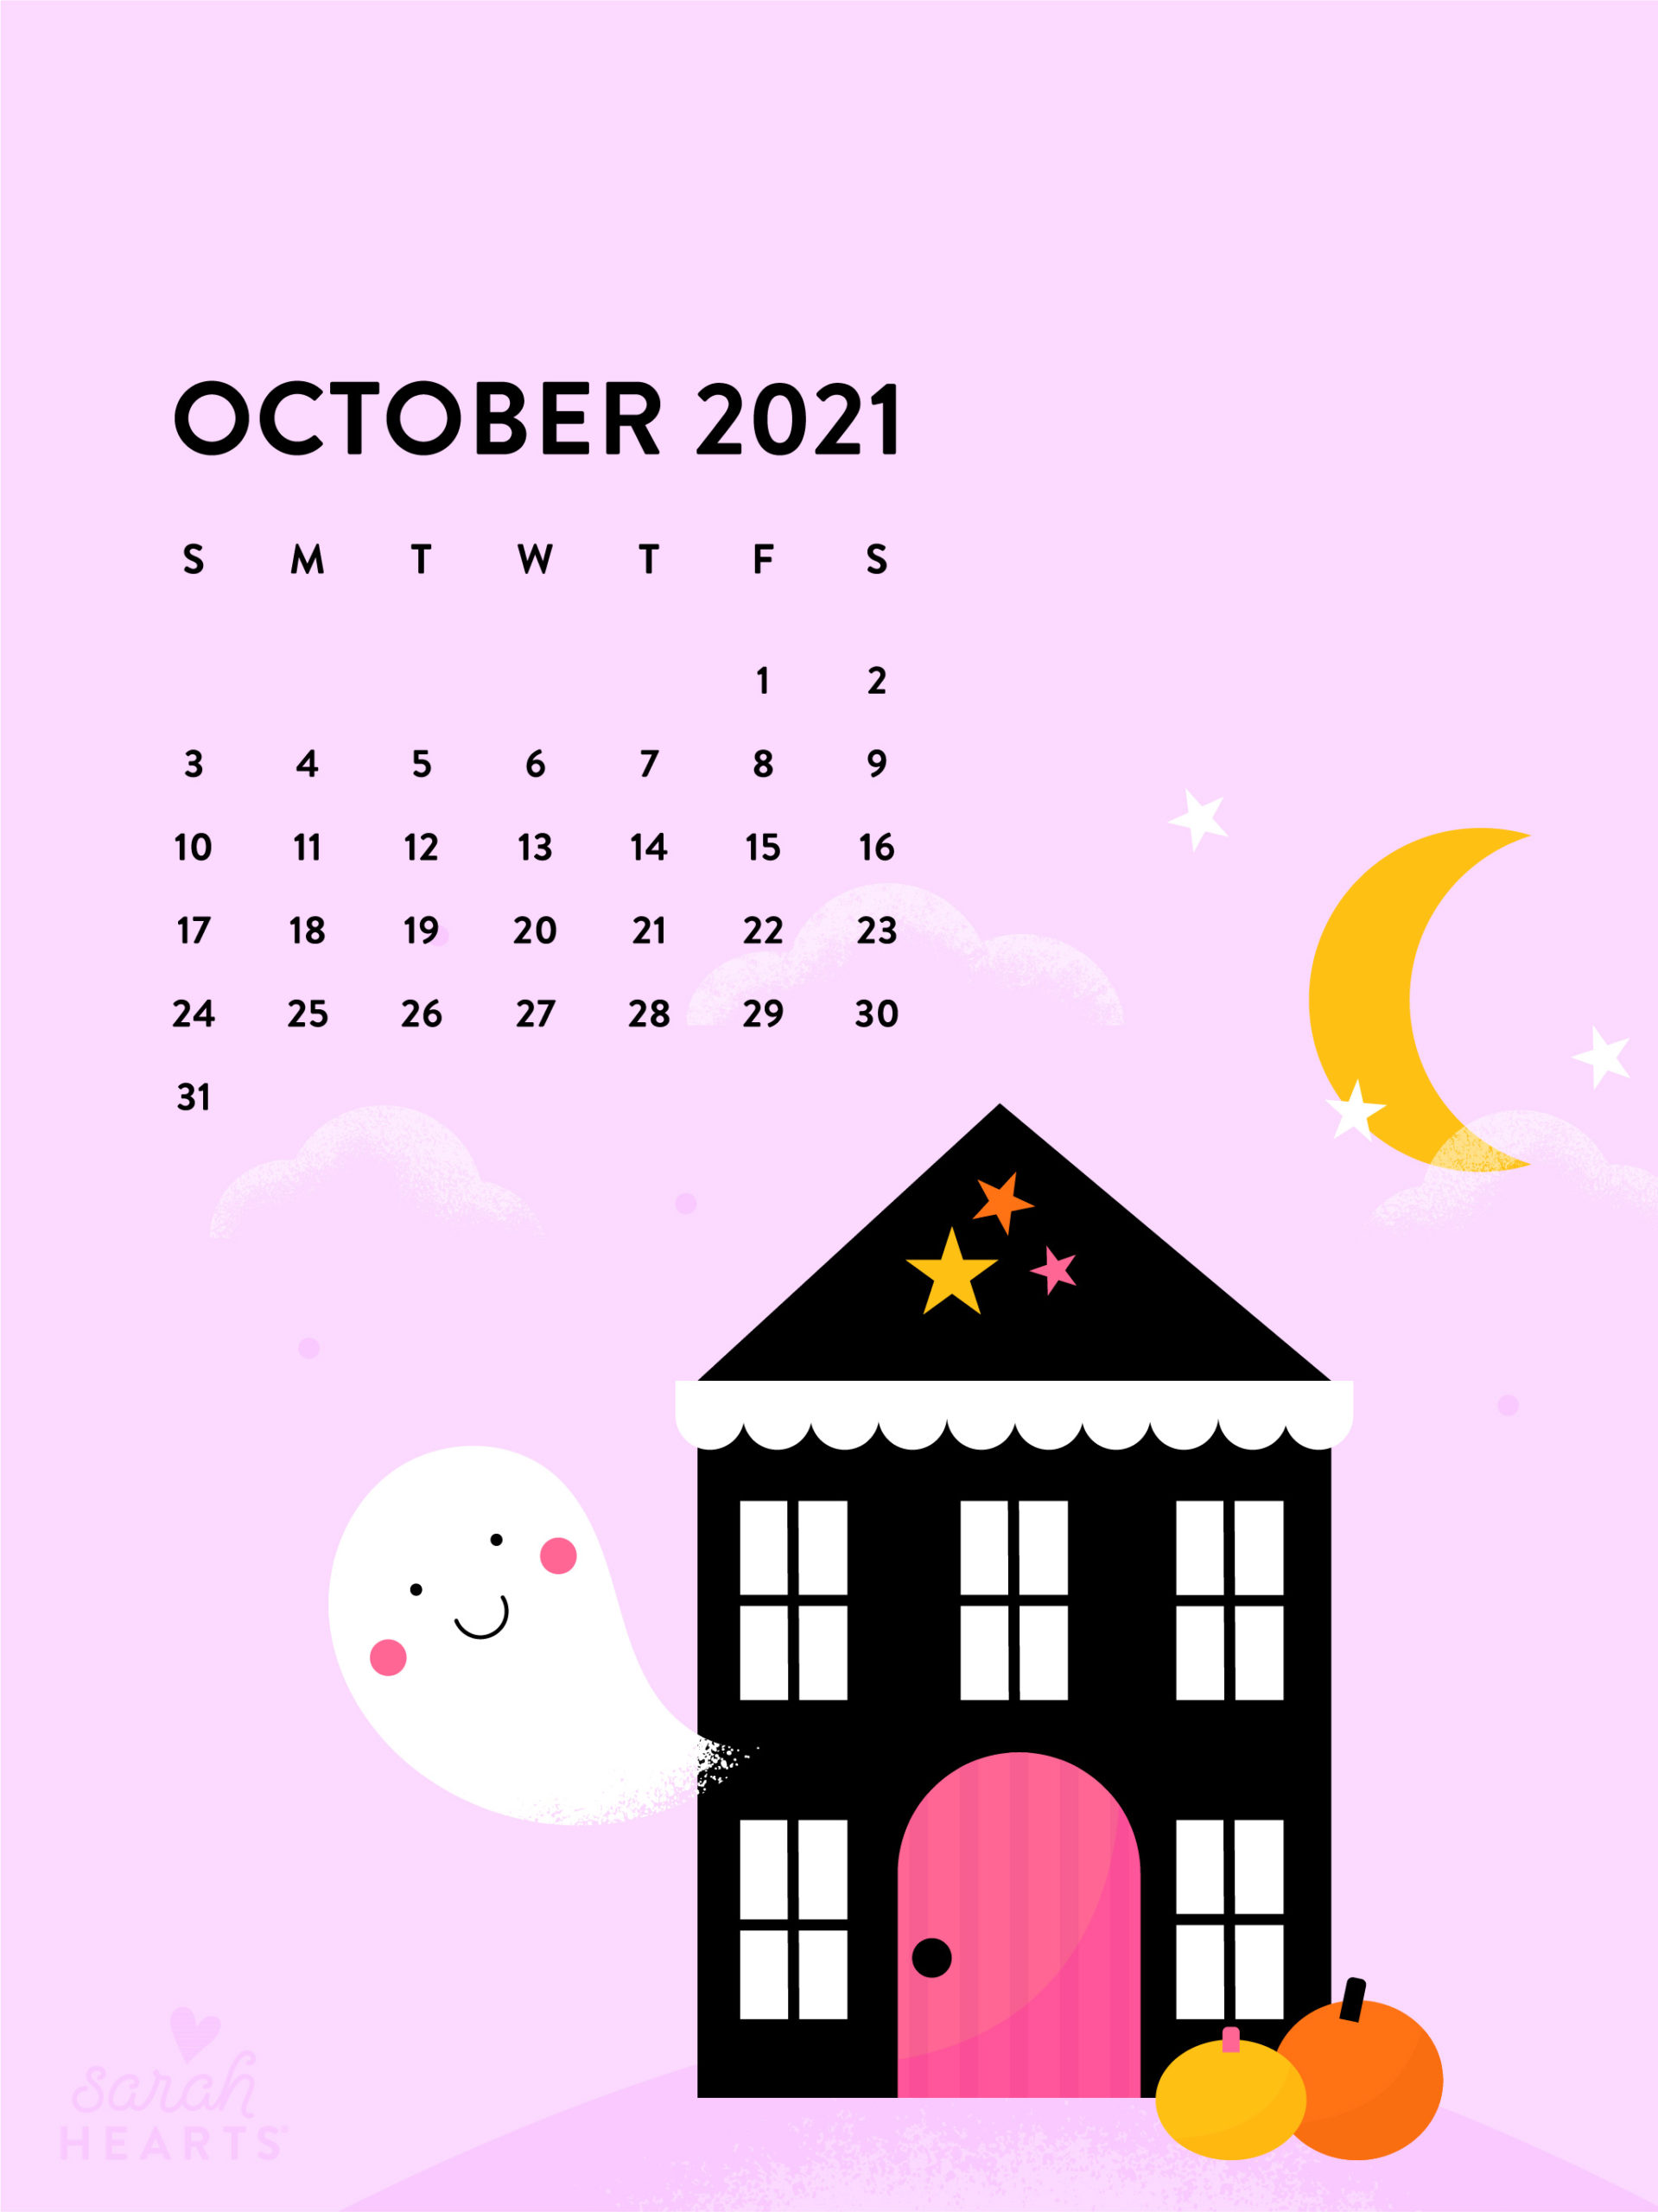 October 2021 Haunted House Calendar Wallpaper - Sarah Hearts